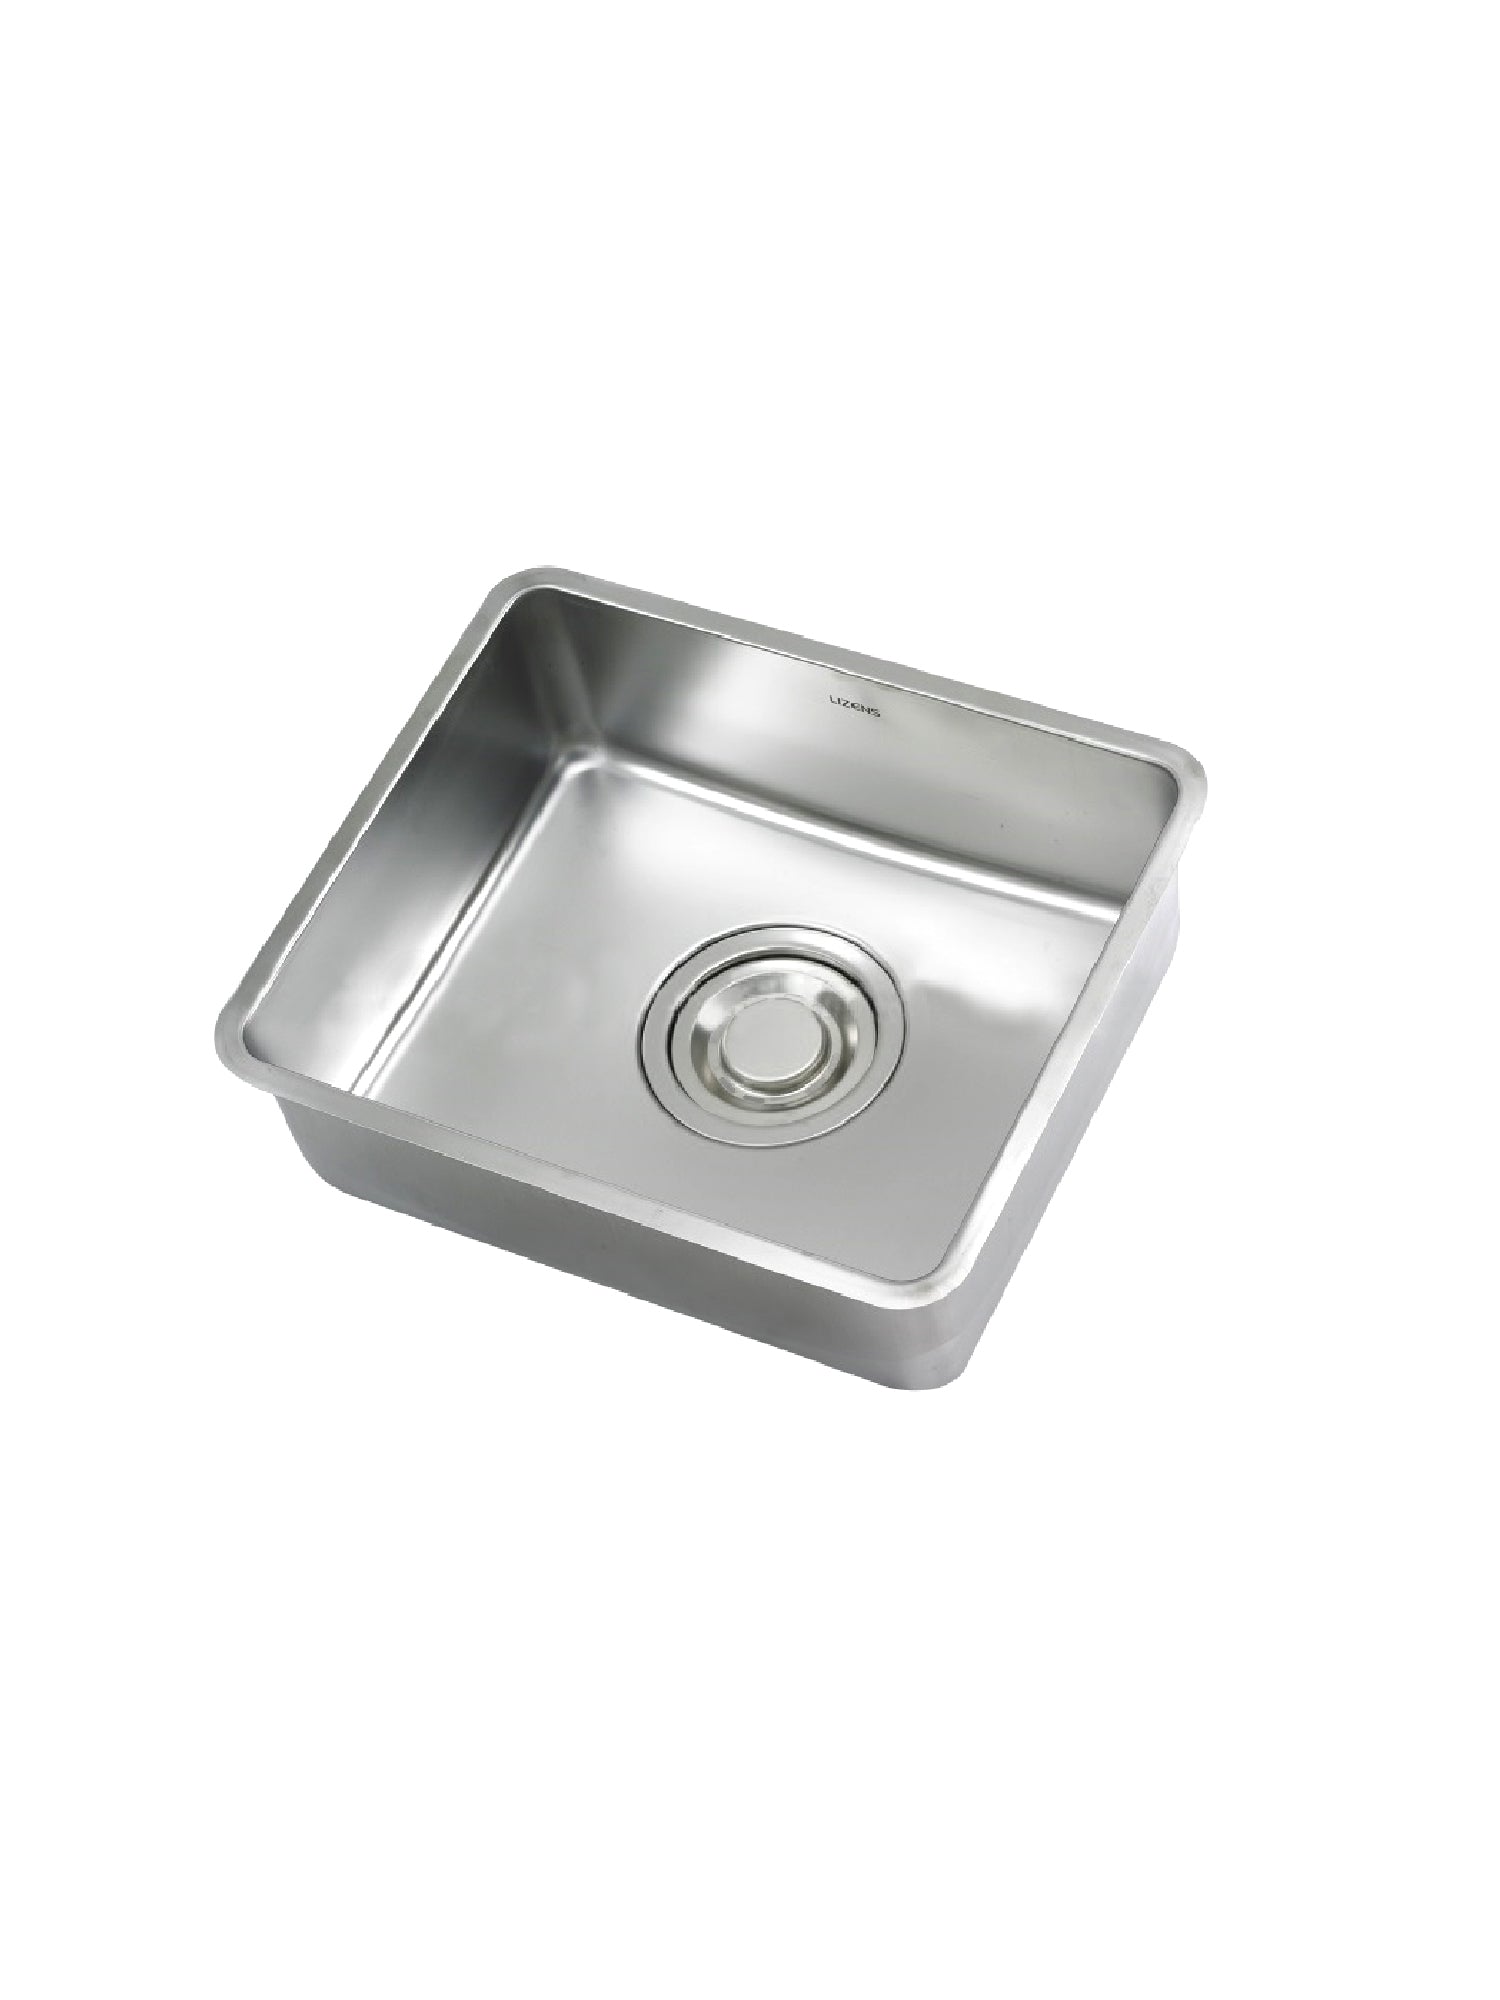 Lizens Single Bowl Kitchen Sink #LQ540 (L) Complete Set